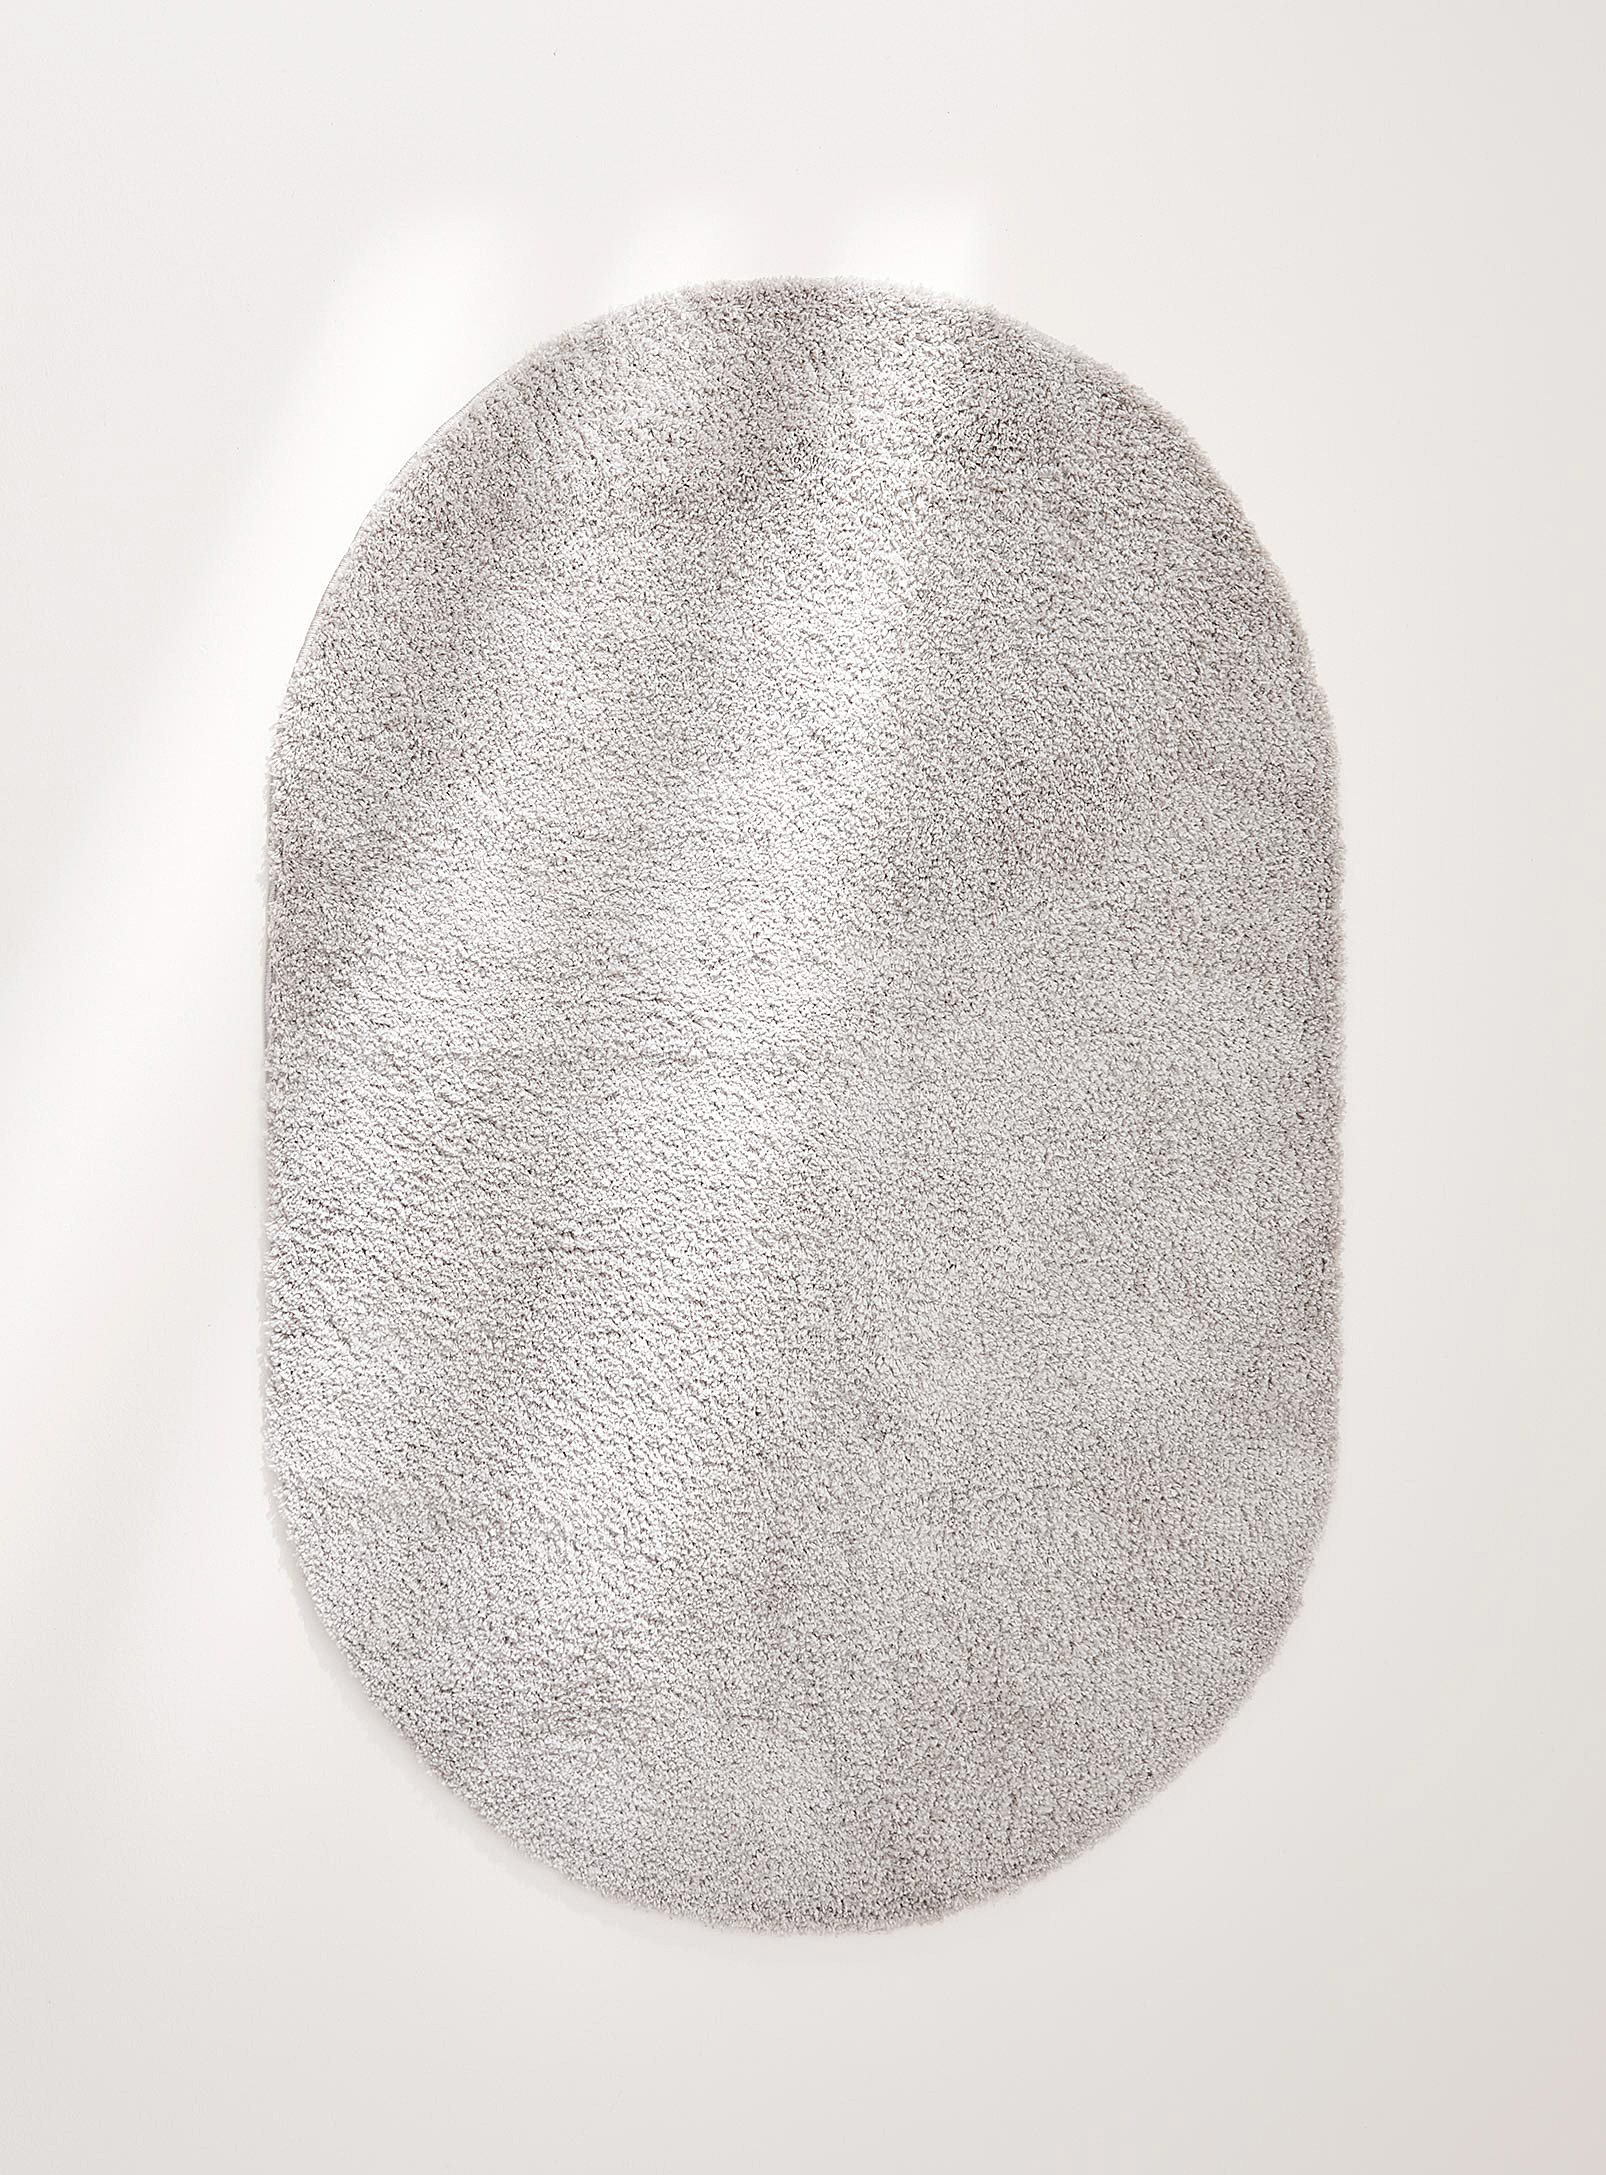 Simons Maison Nature's Essence Oval Shag Rug 120 X 180 Cm In Light Grey